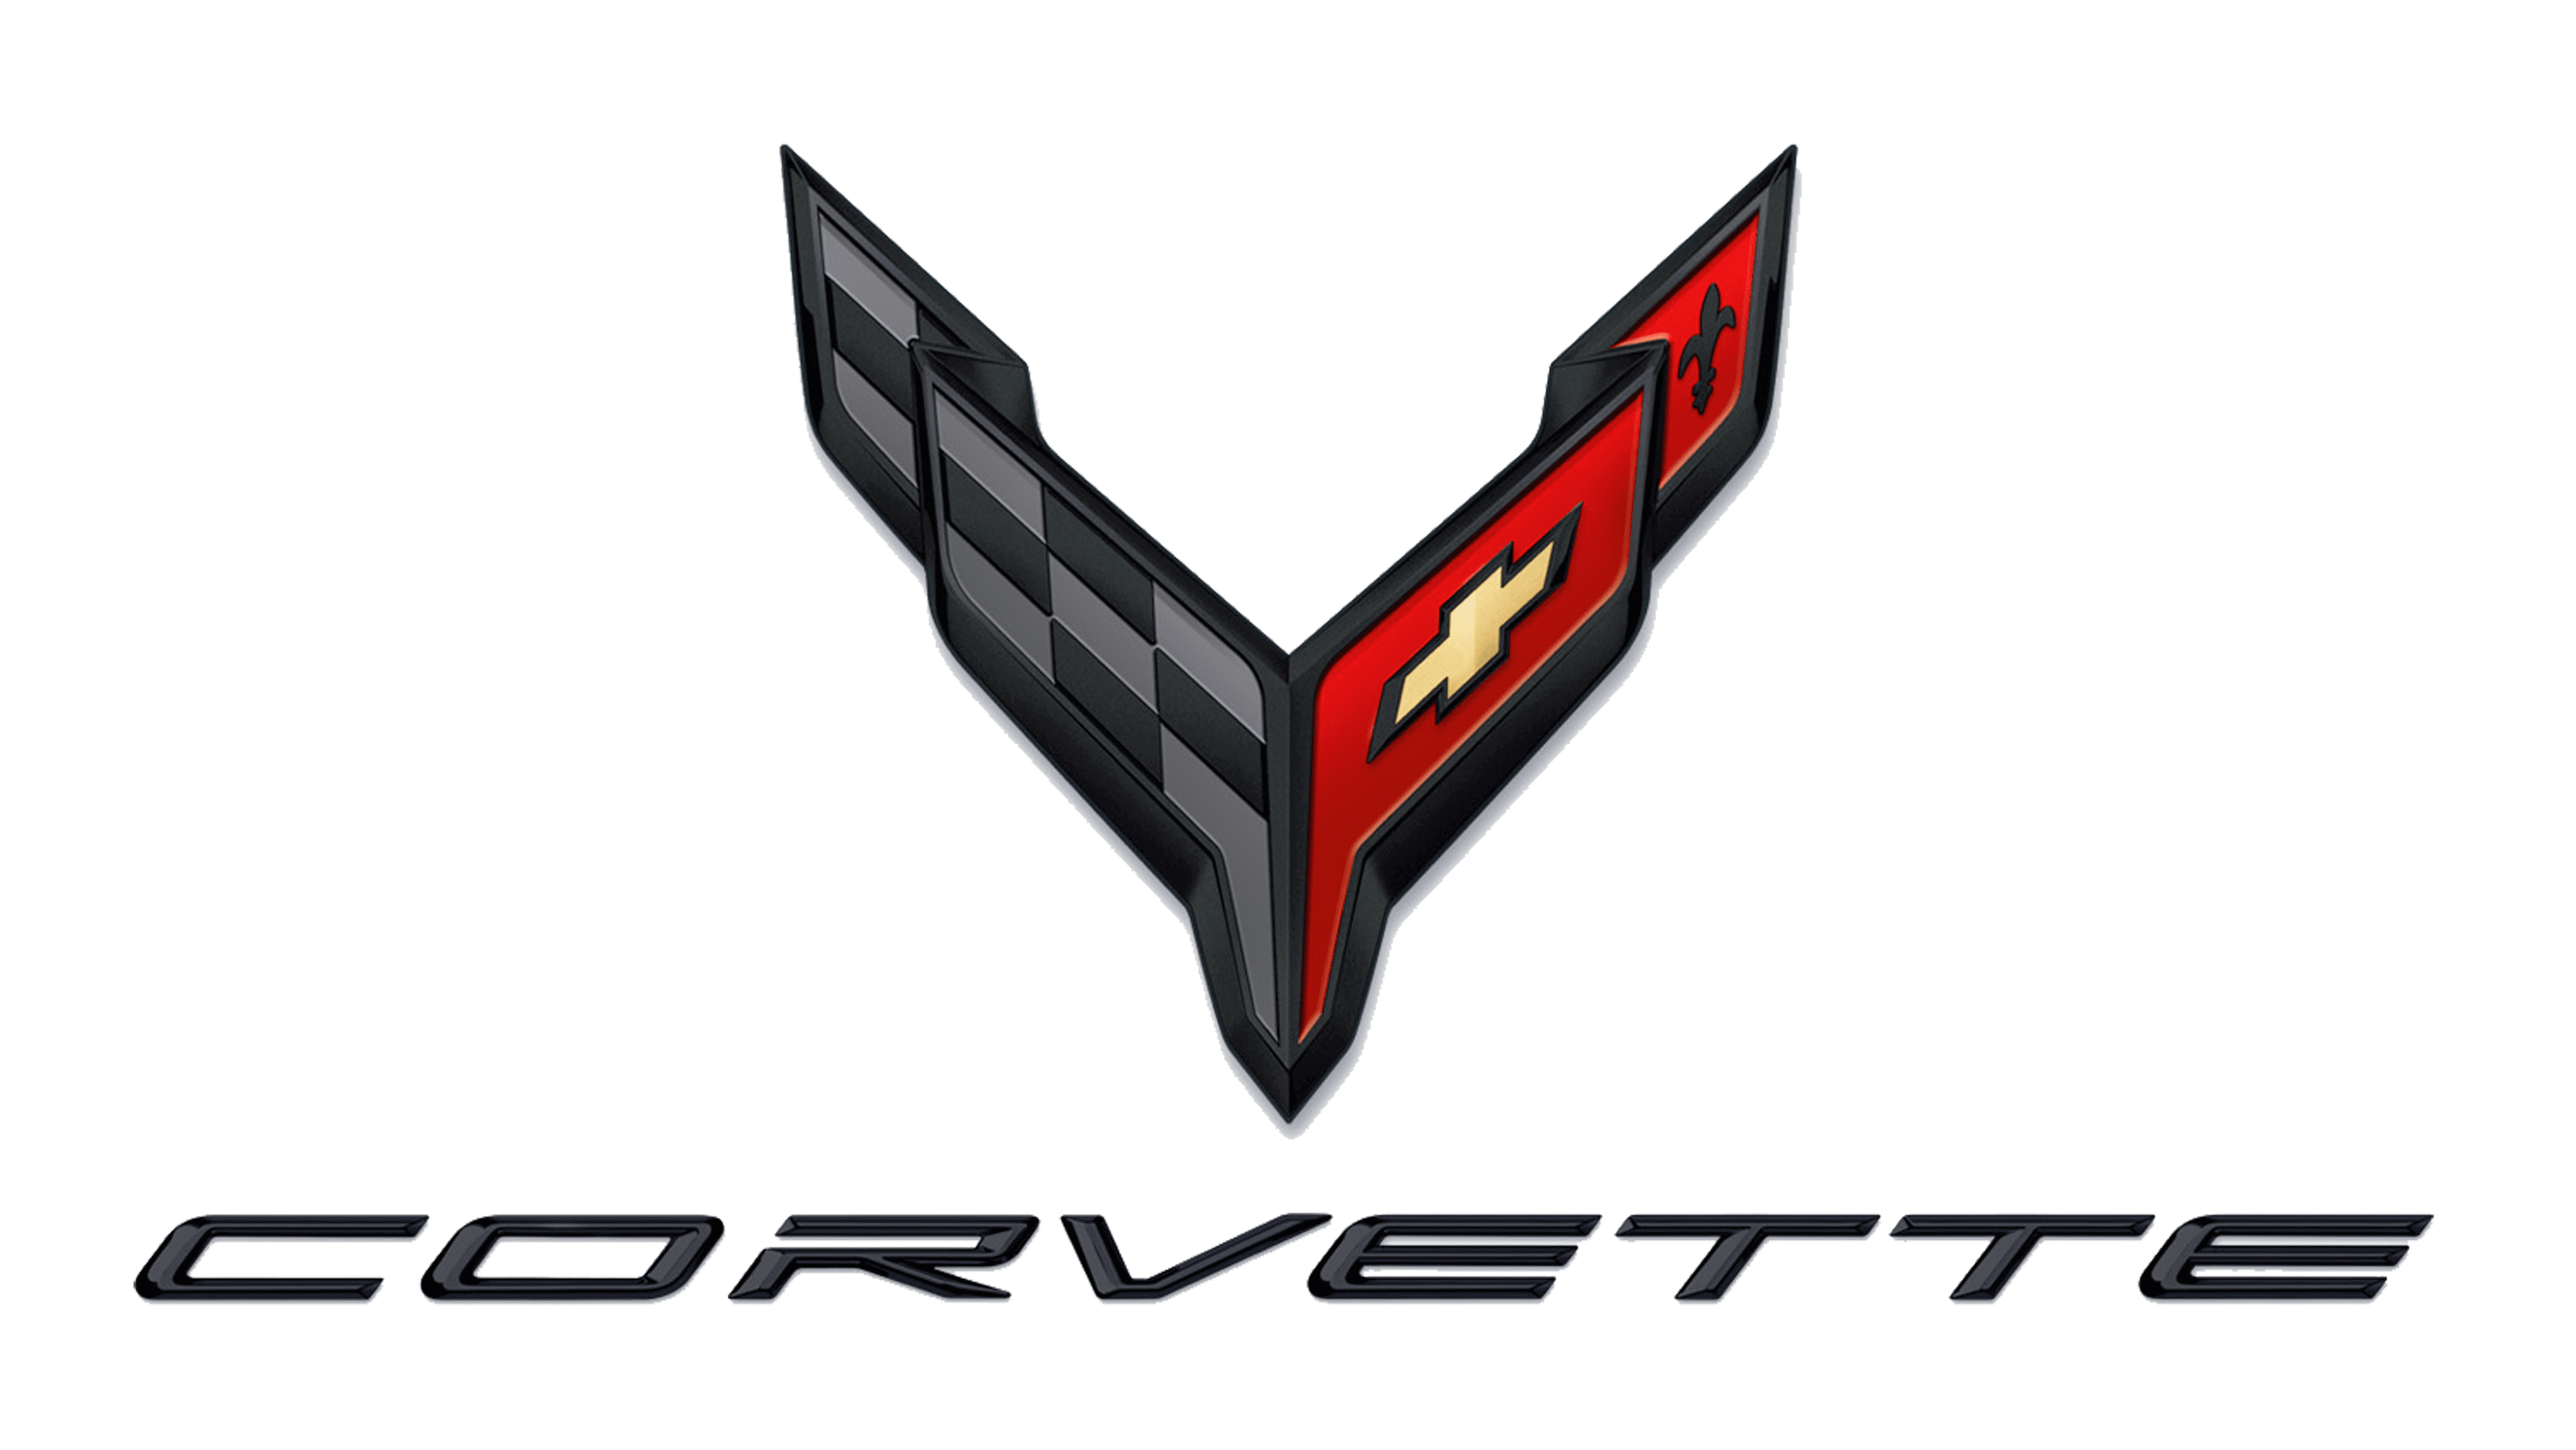 C7 Corvette Oracle Illuminated Cross Flags Logo